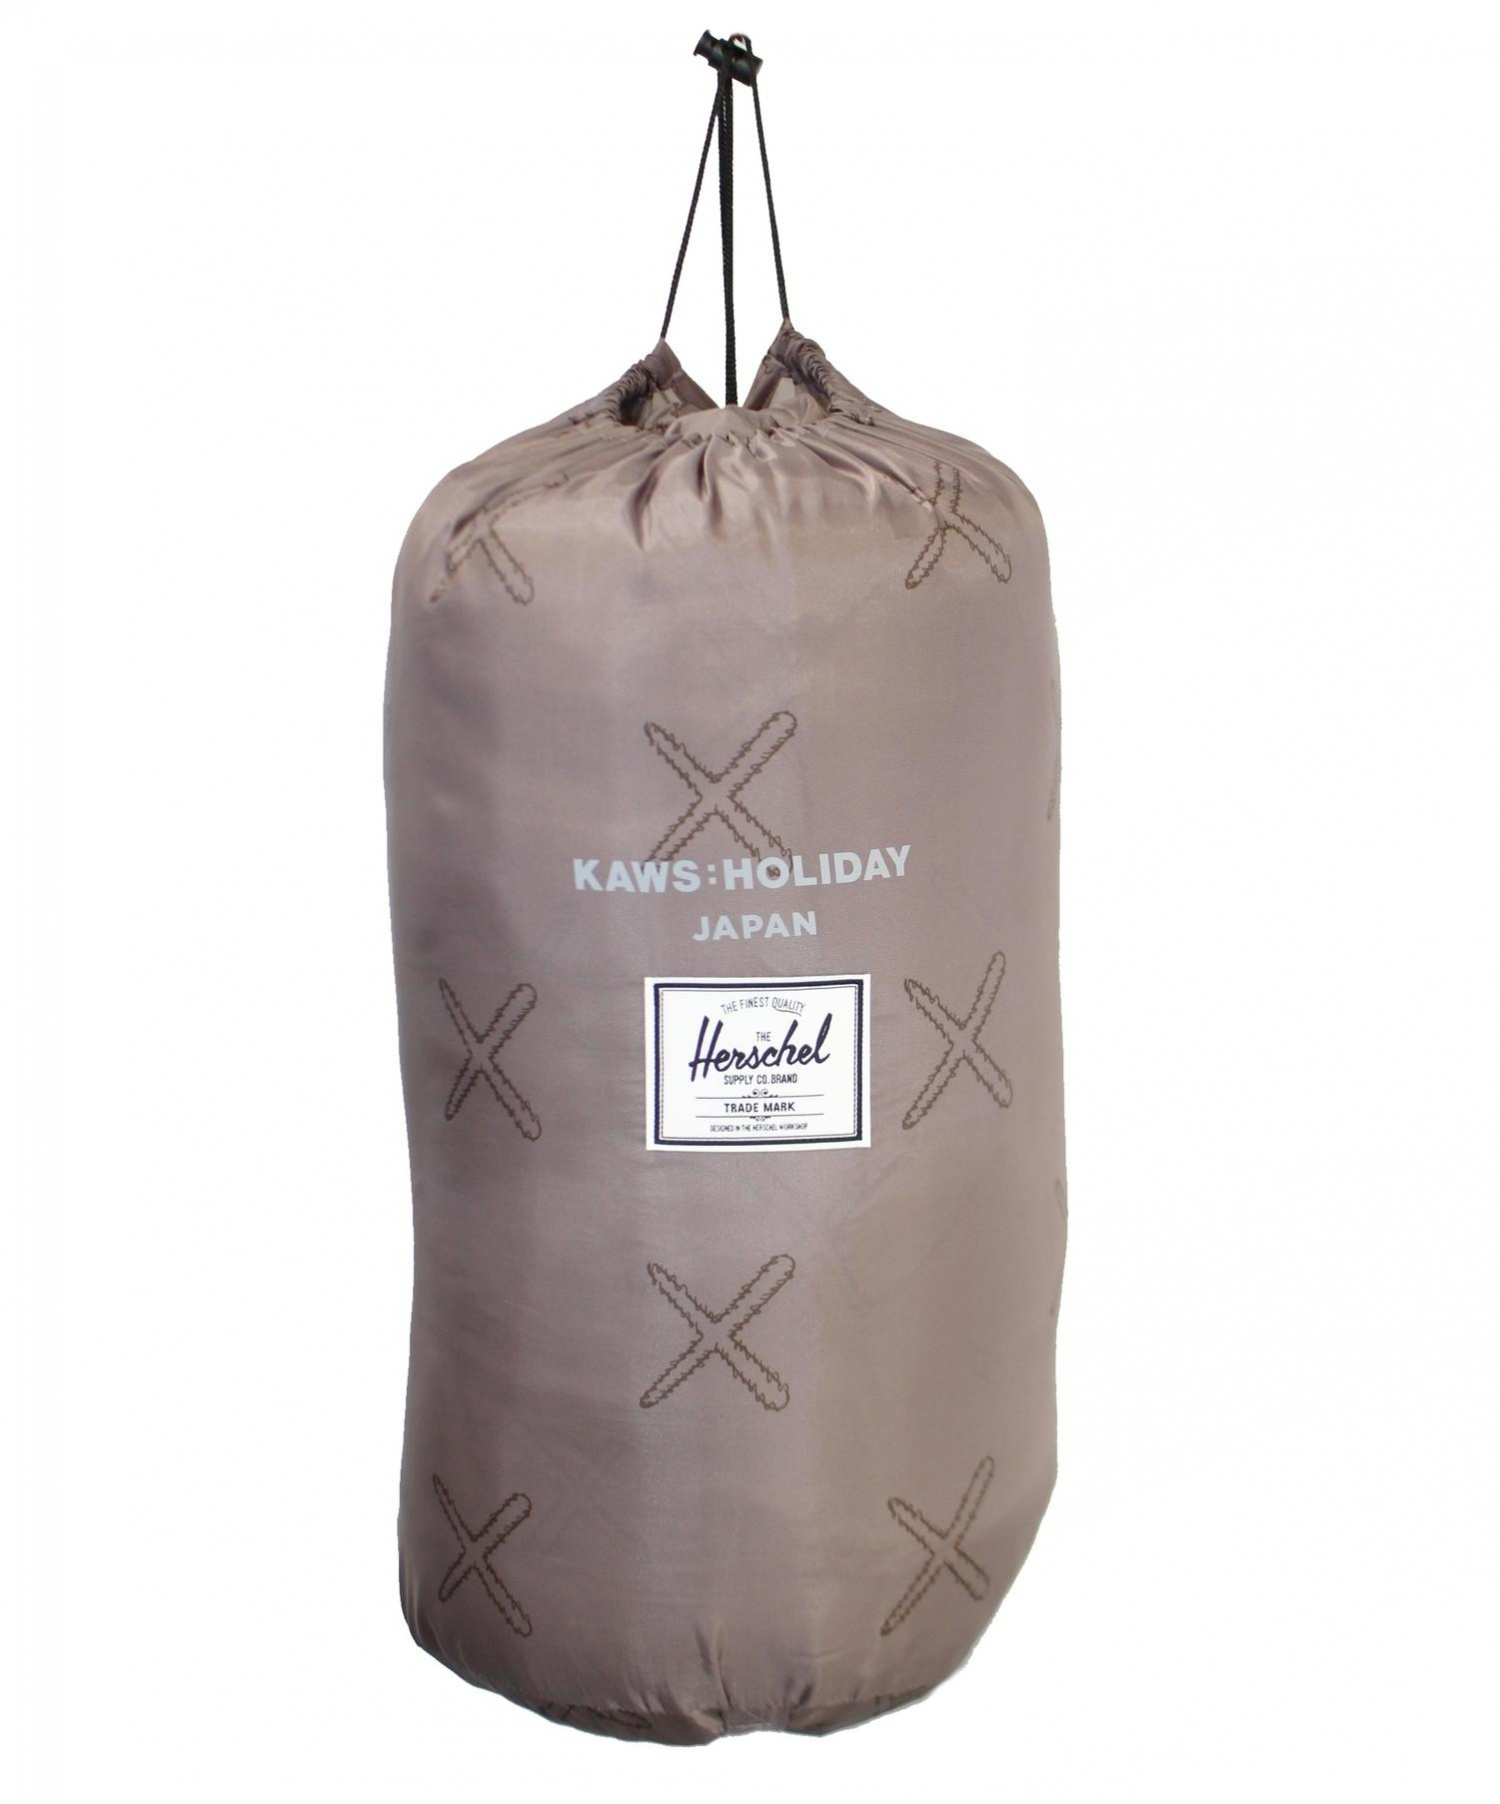 独創的 x 【新品未使用】KAWS Herschel カウズ 寝袋 Supply 